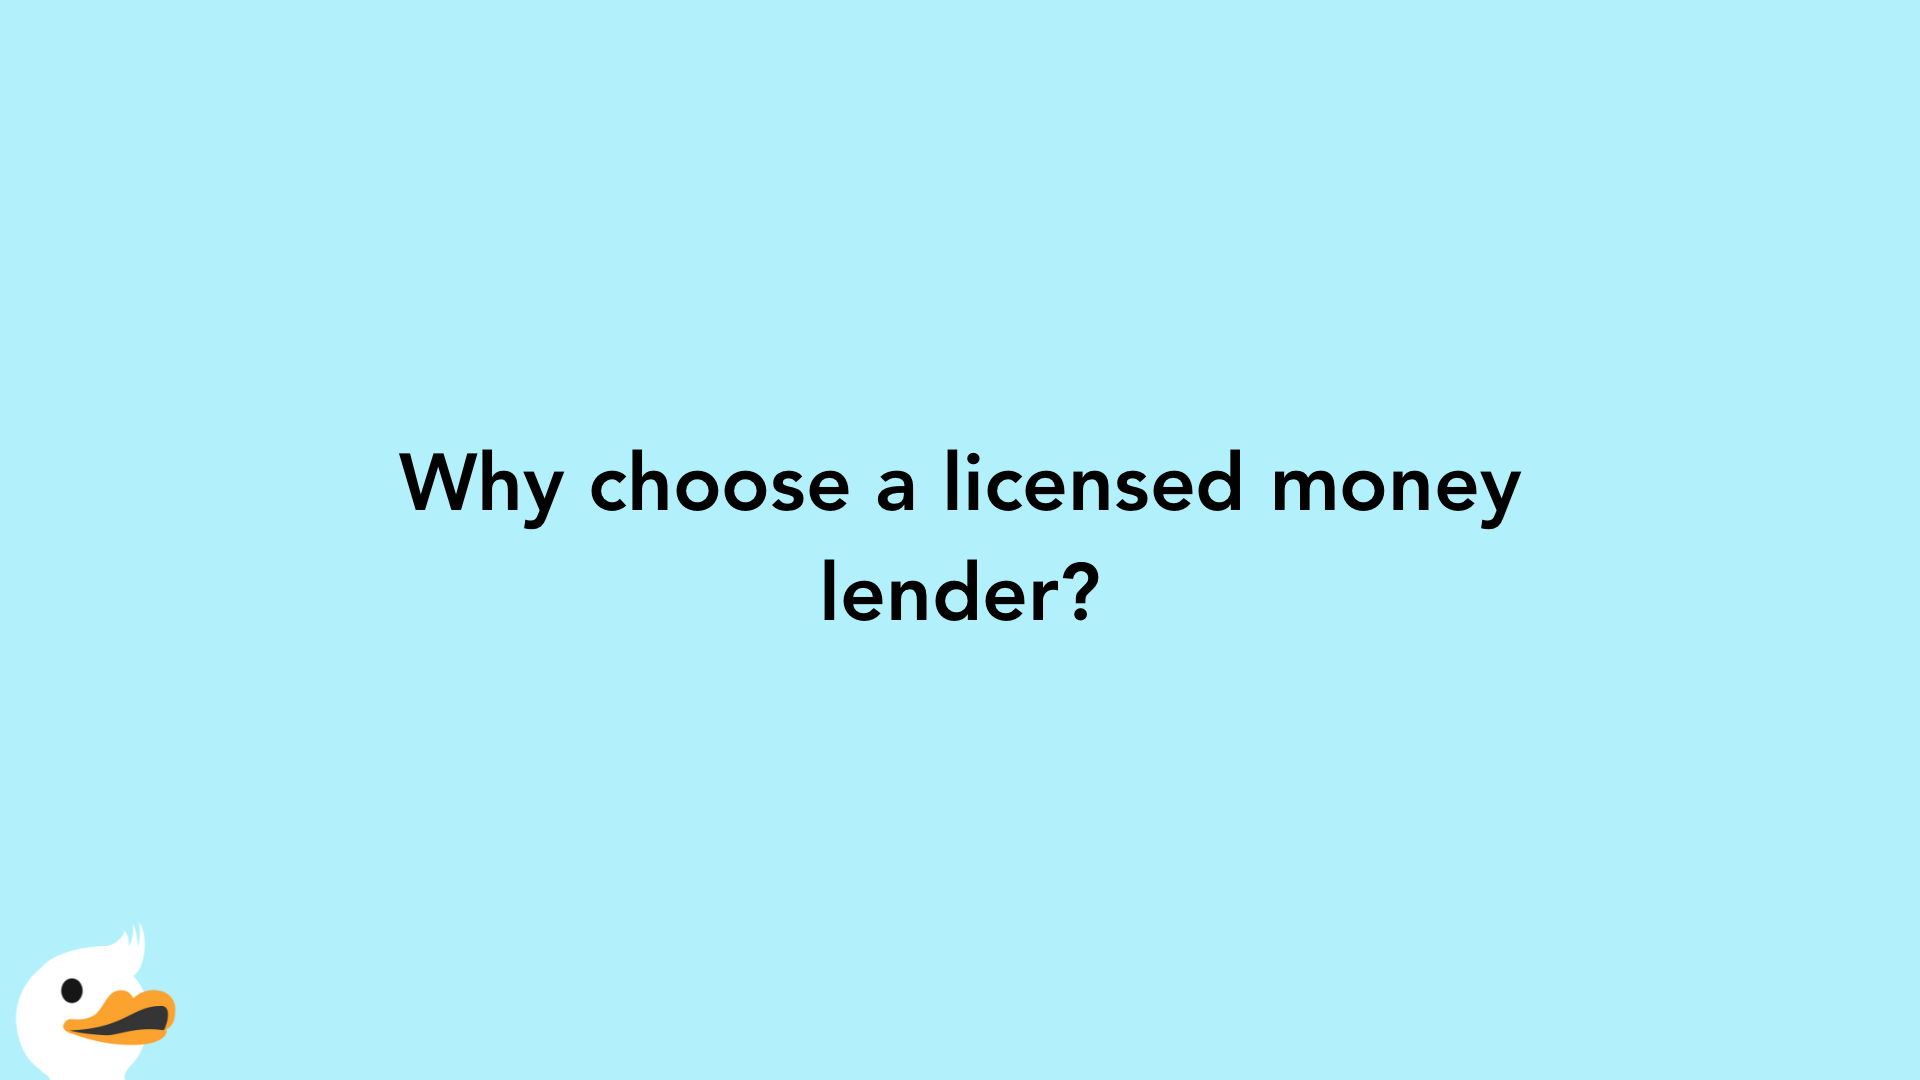 Why choose a licensed money lender?